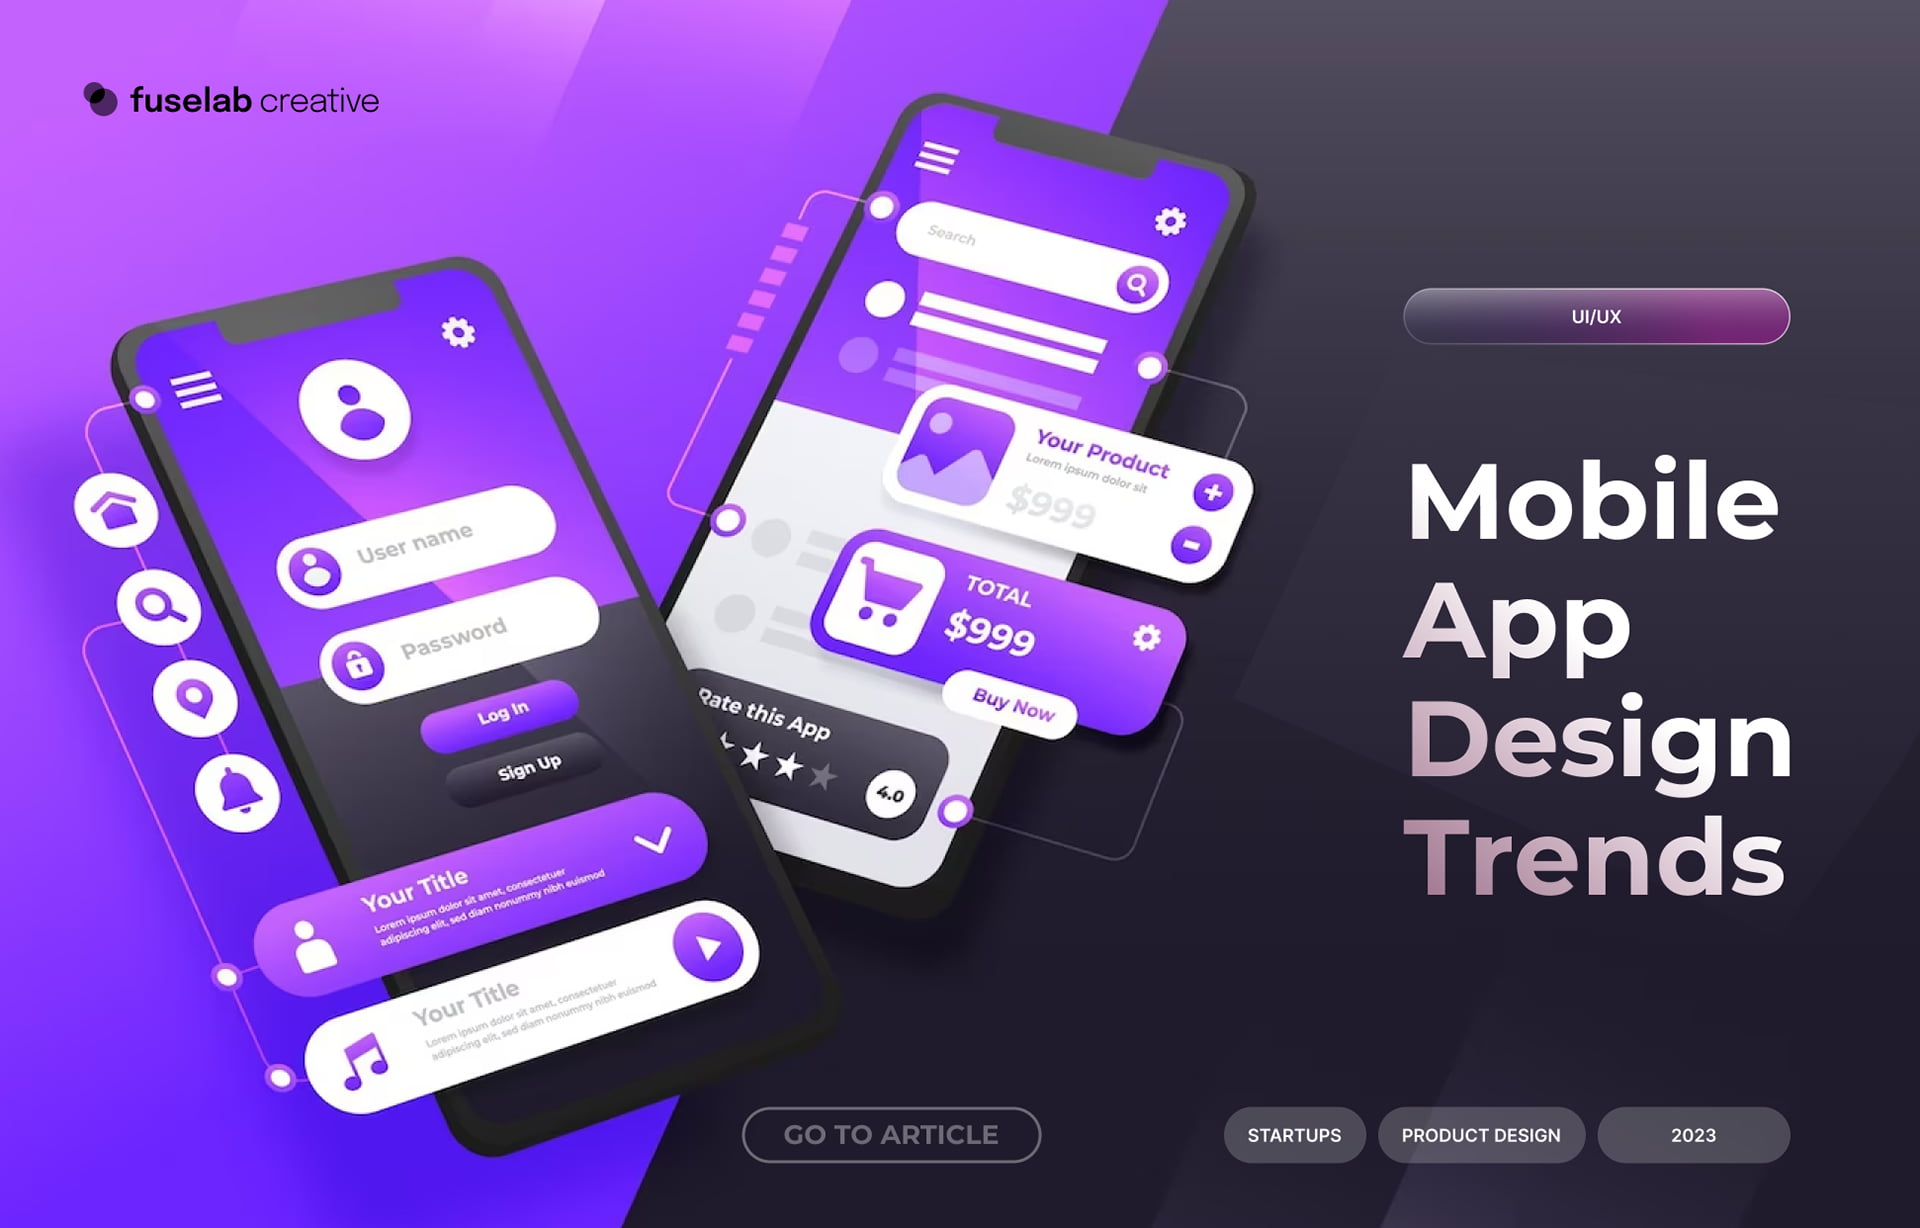 Mobile App Design Trends 2023